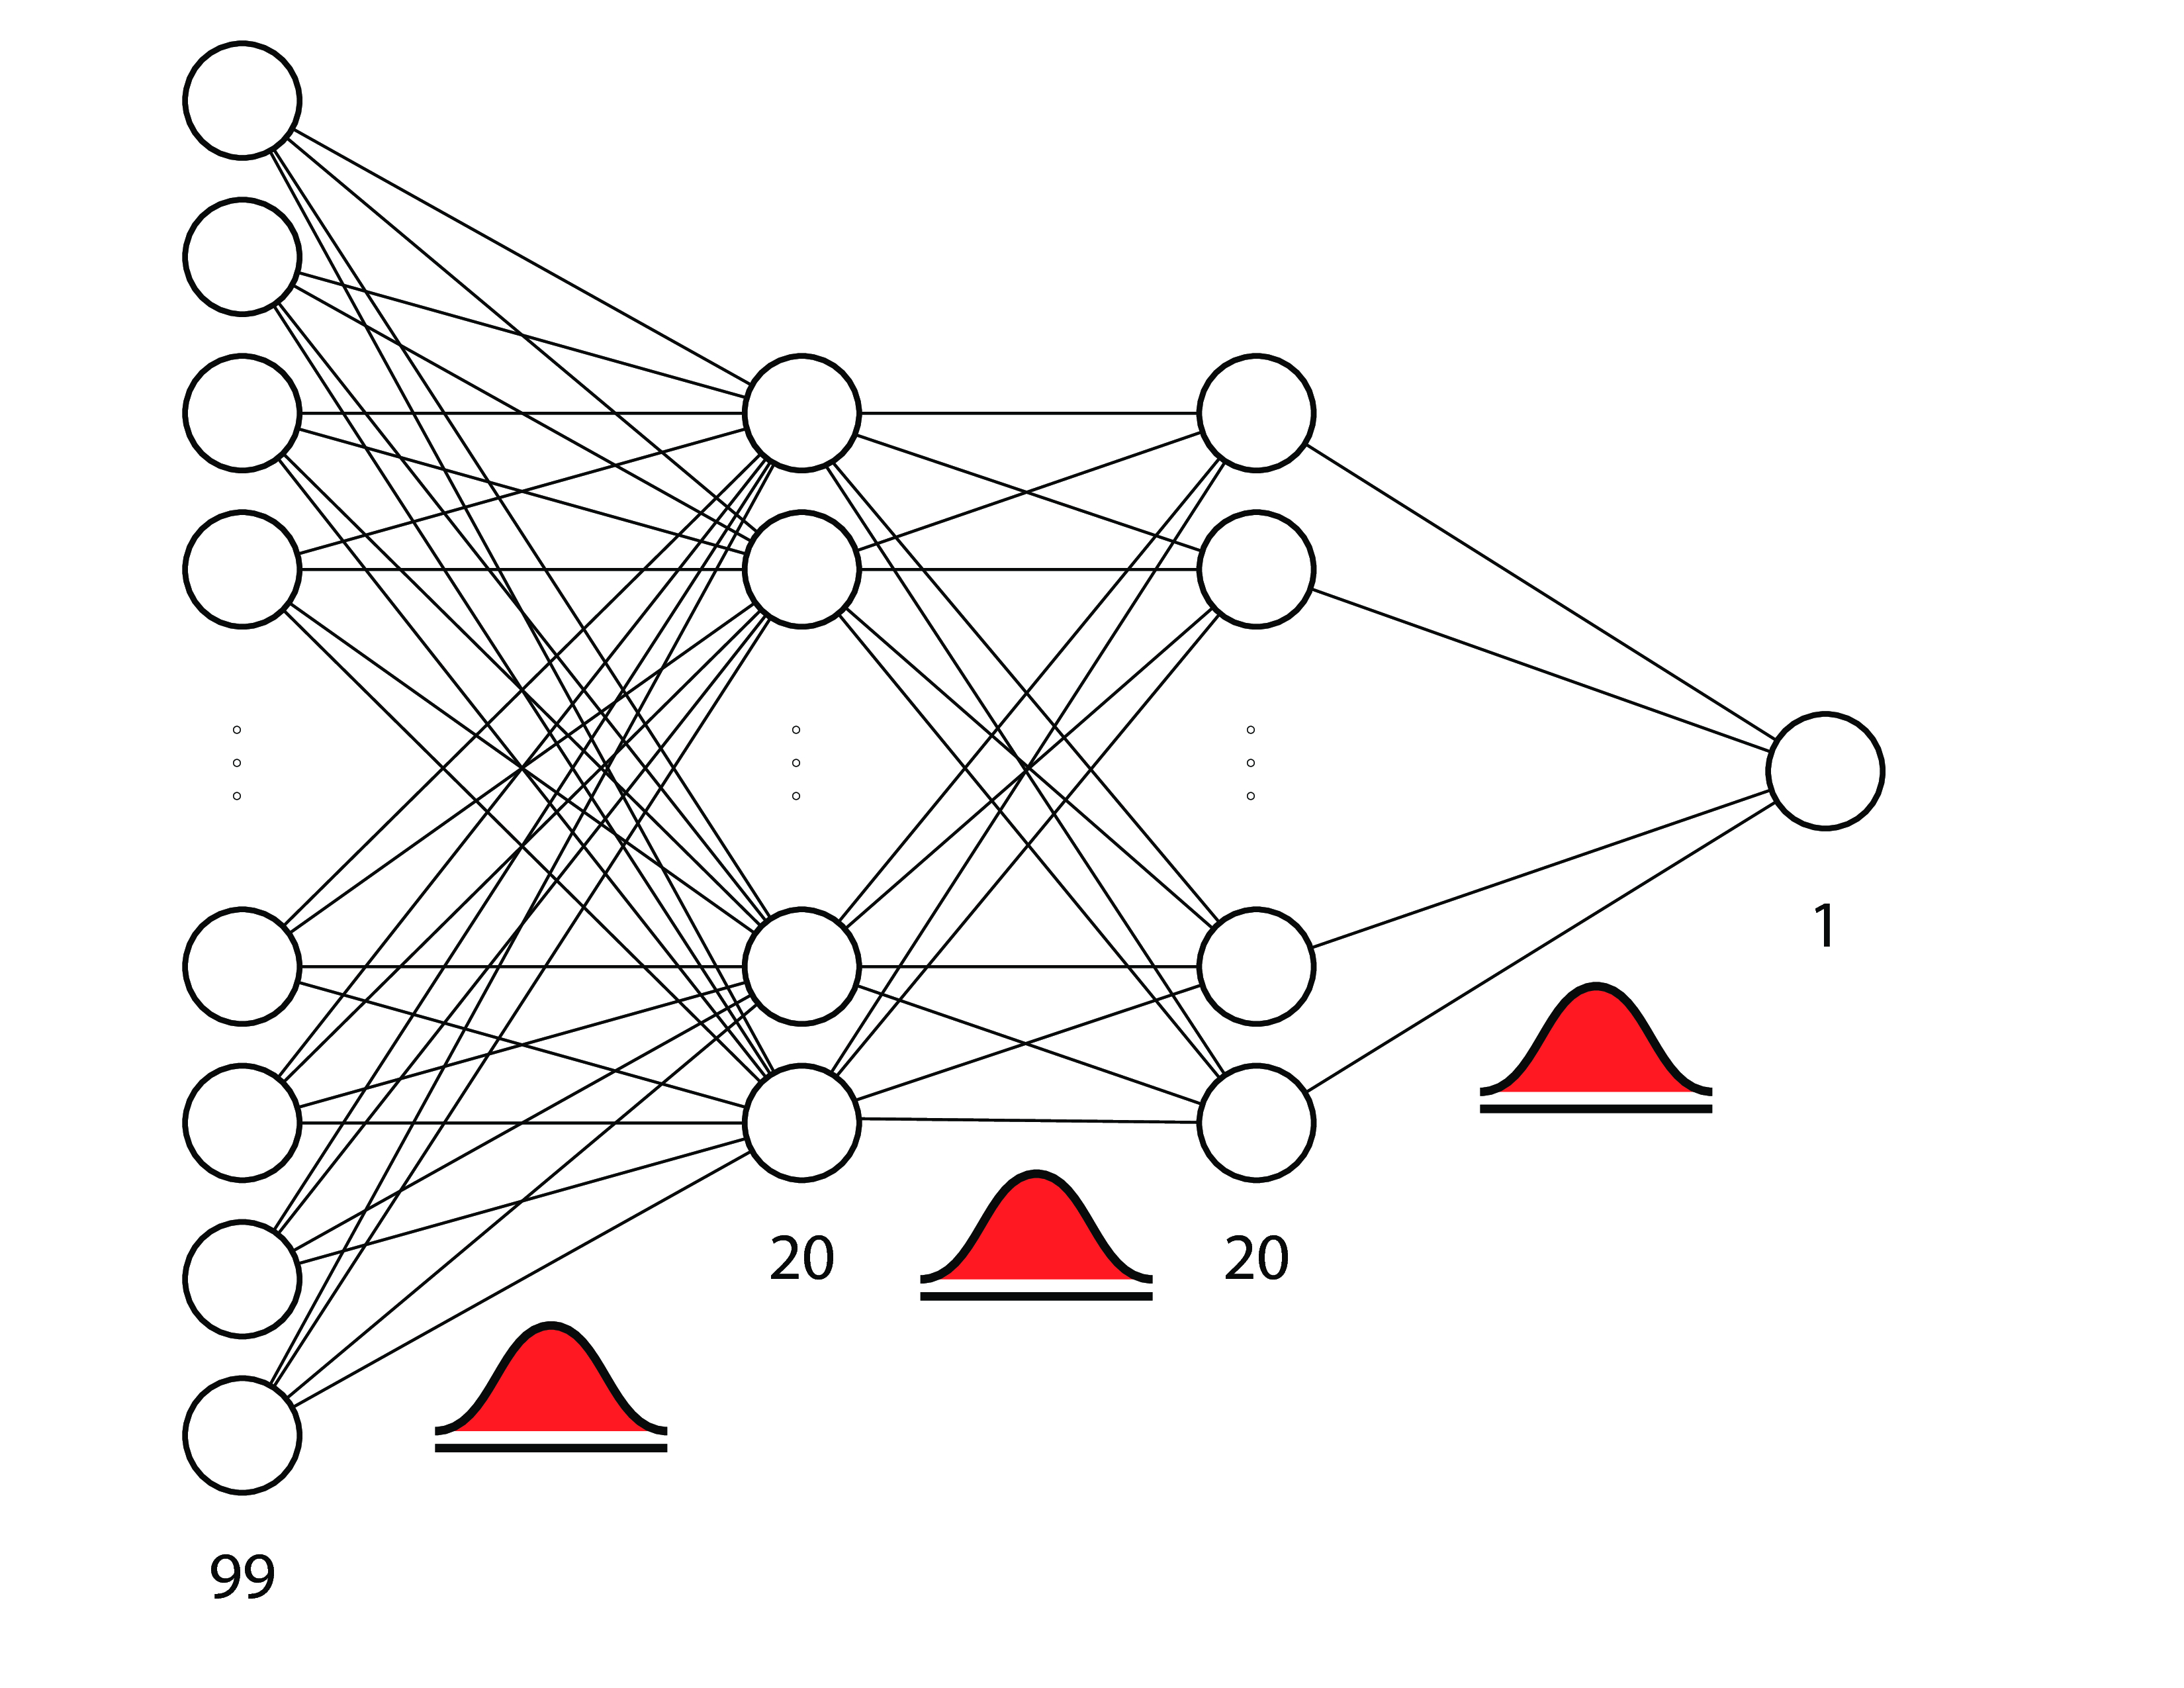 bayesian neural networks